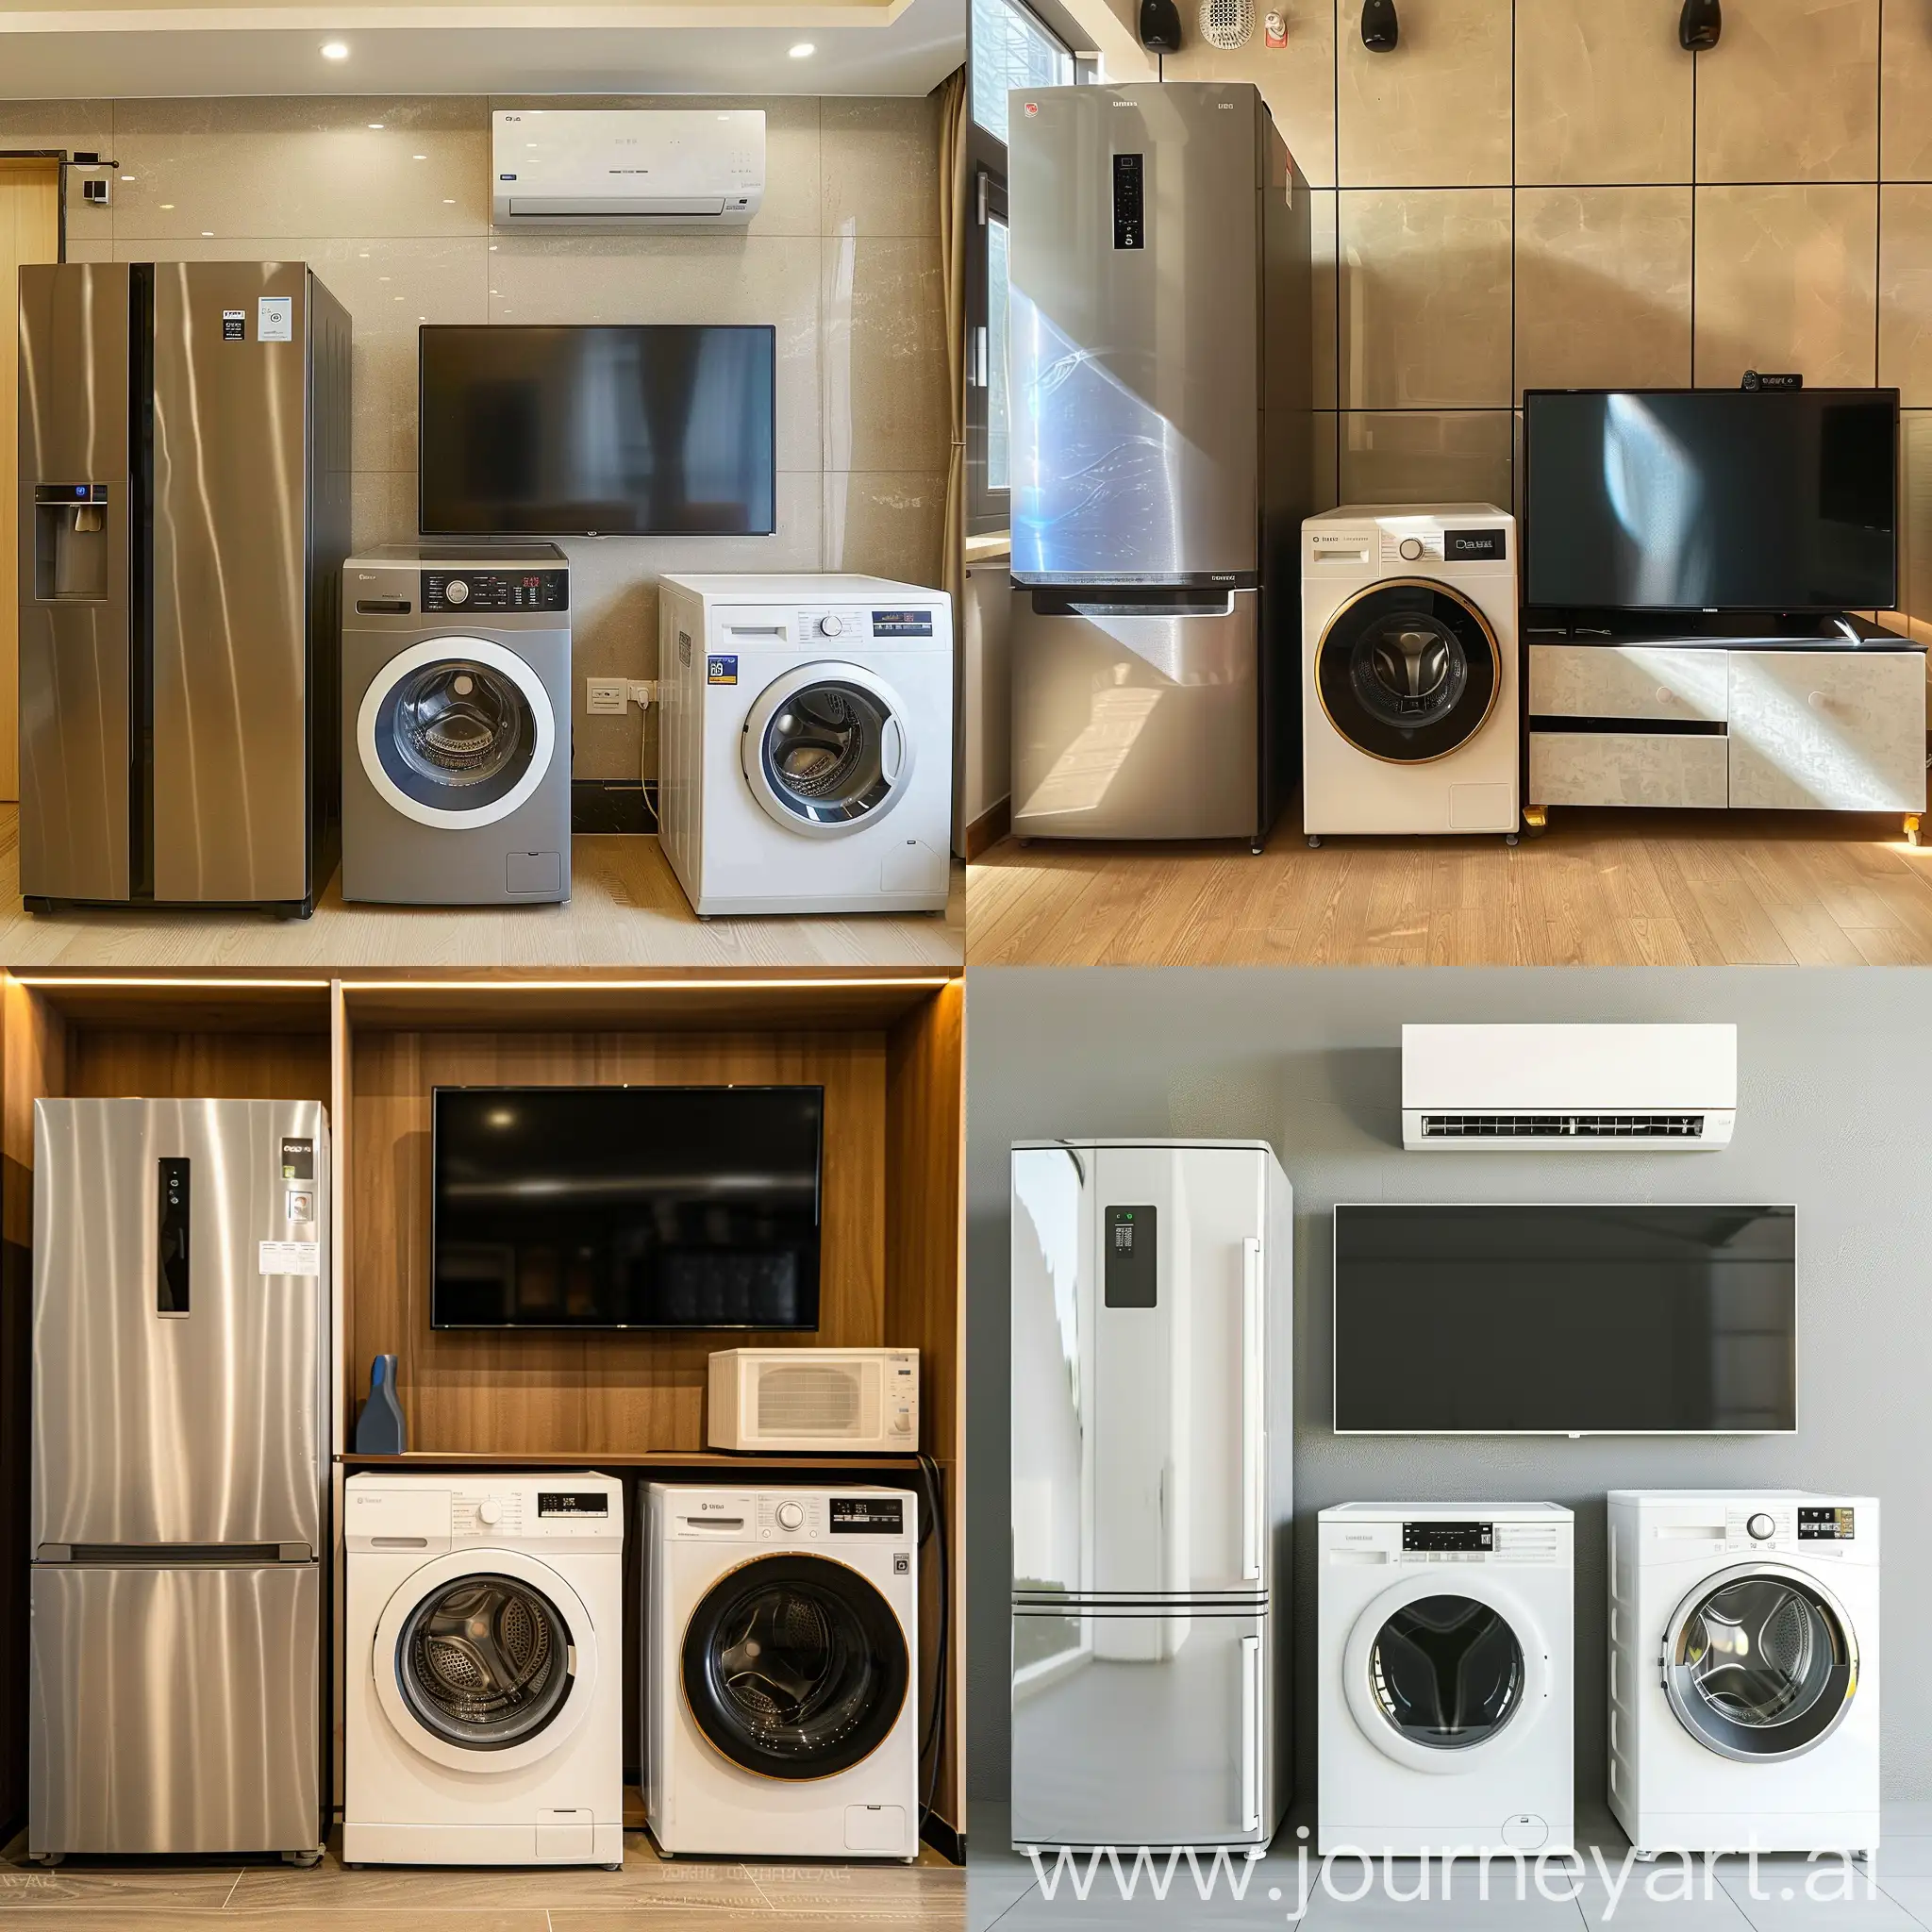 Modern-Appliance-Ensemble-Fridge-AC-TV-and-Washing-Machine-in-Perfect-Harmony